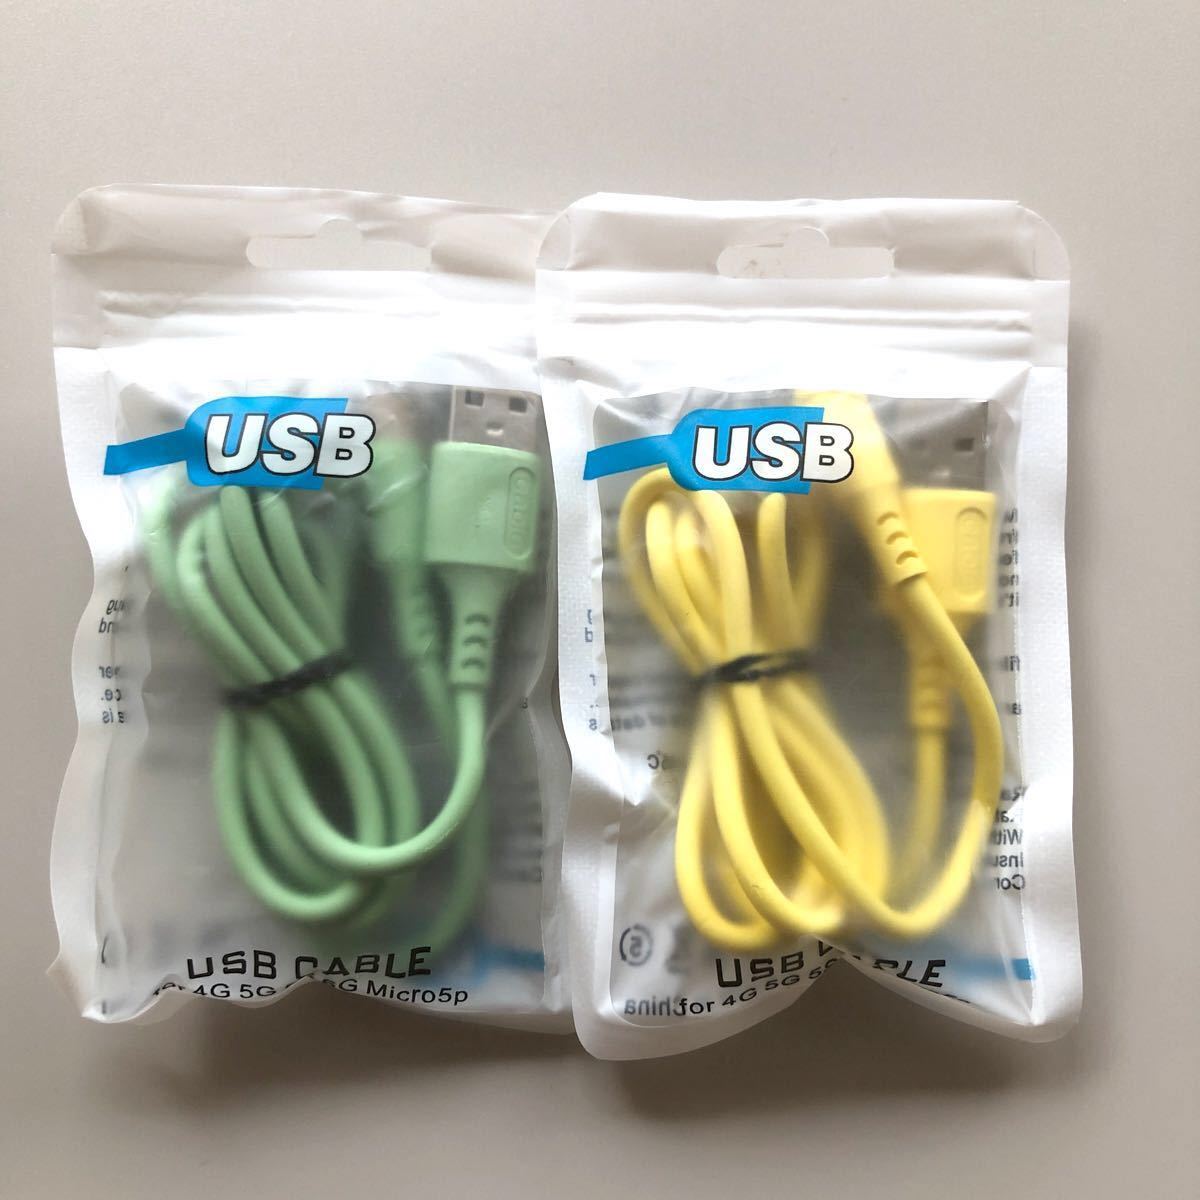 Cタイプ 充電ケーブル USBケーブル                        2個セット